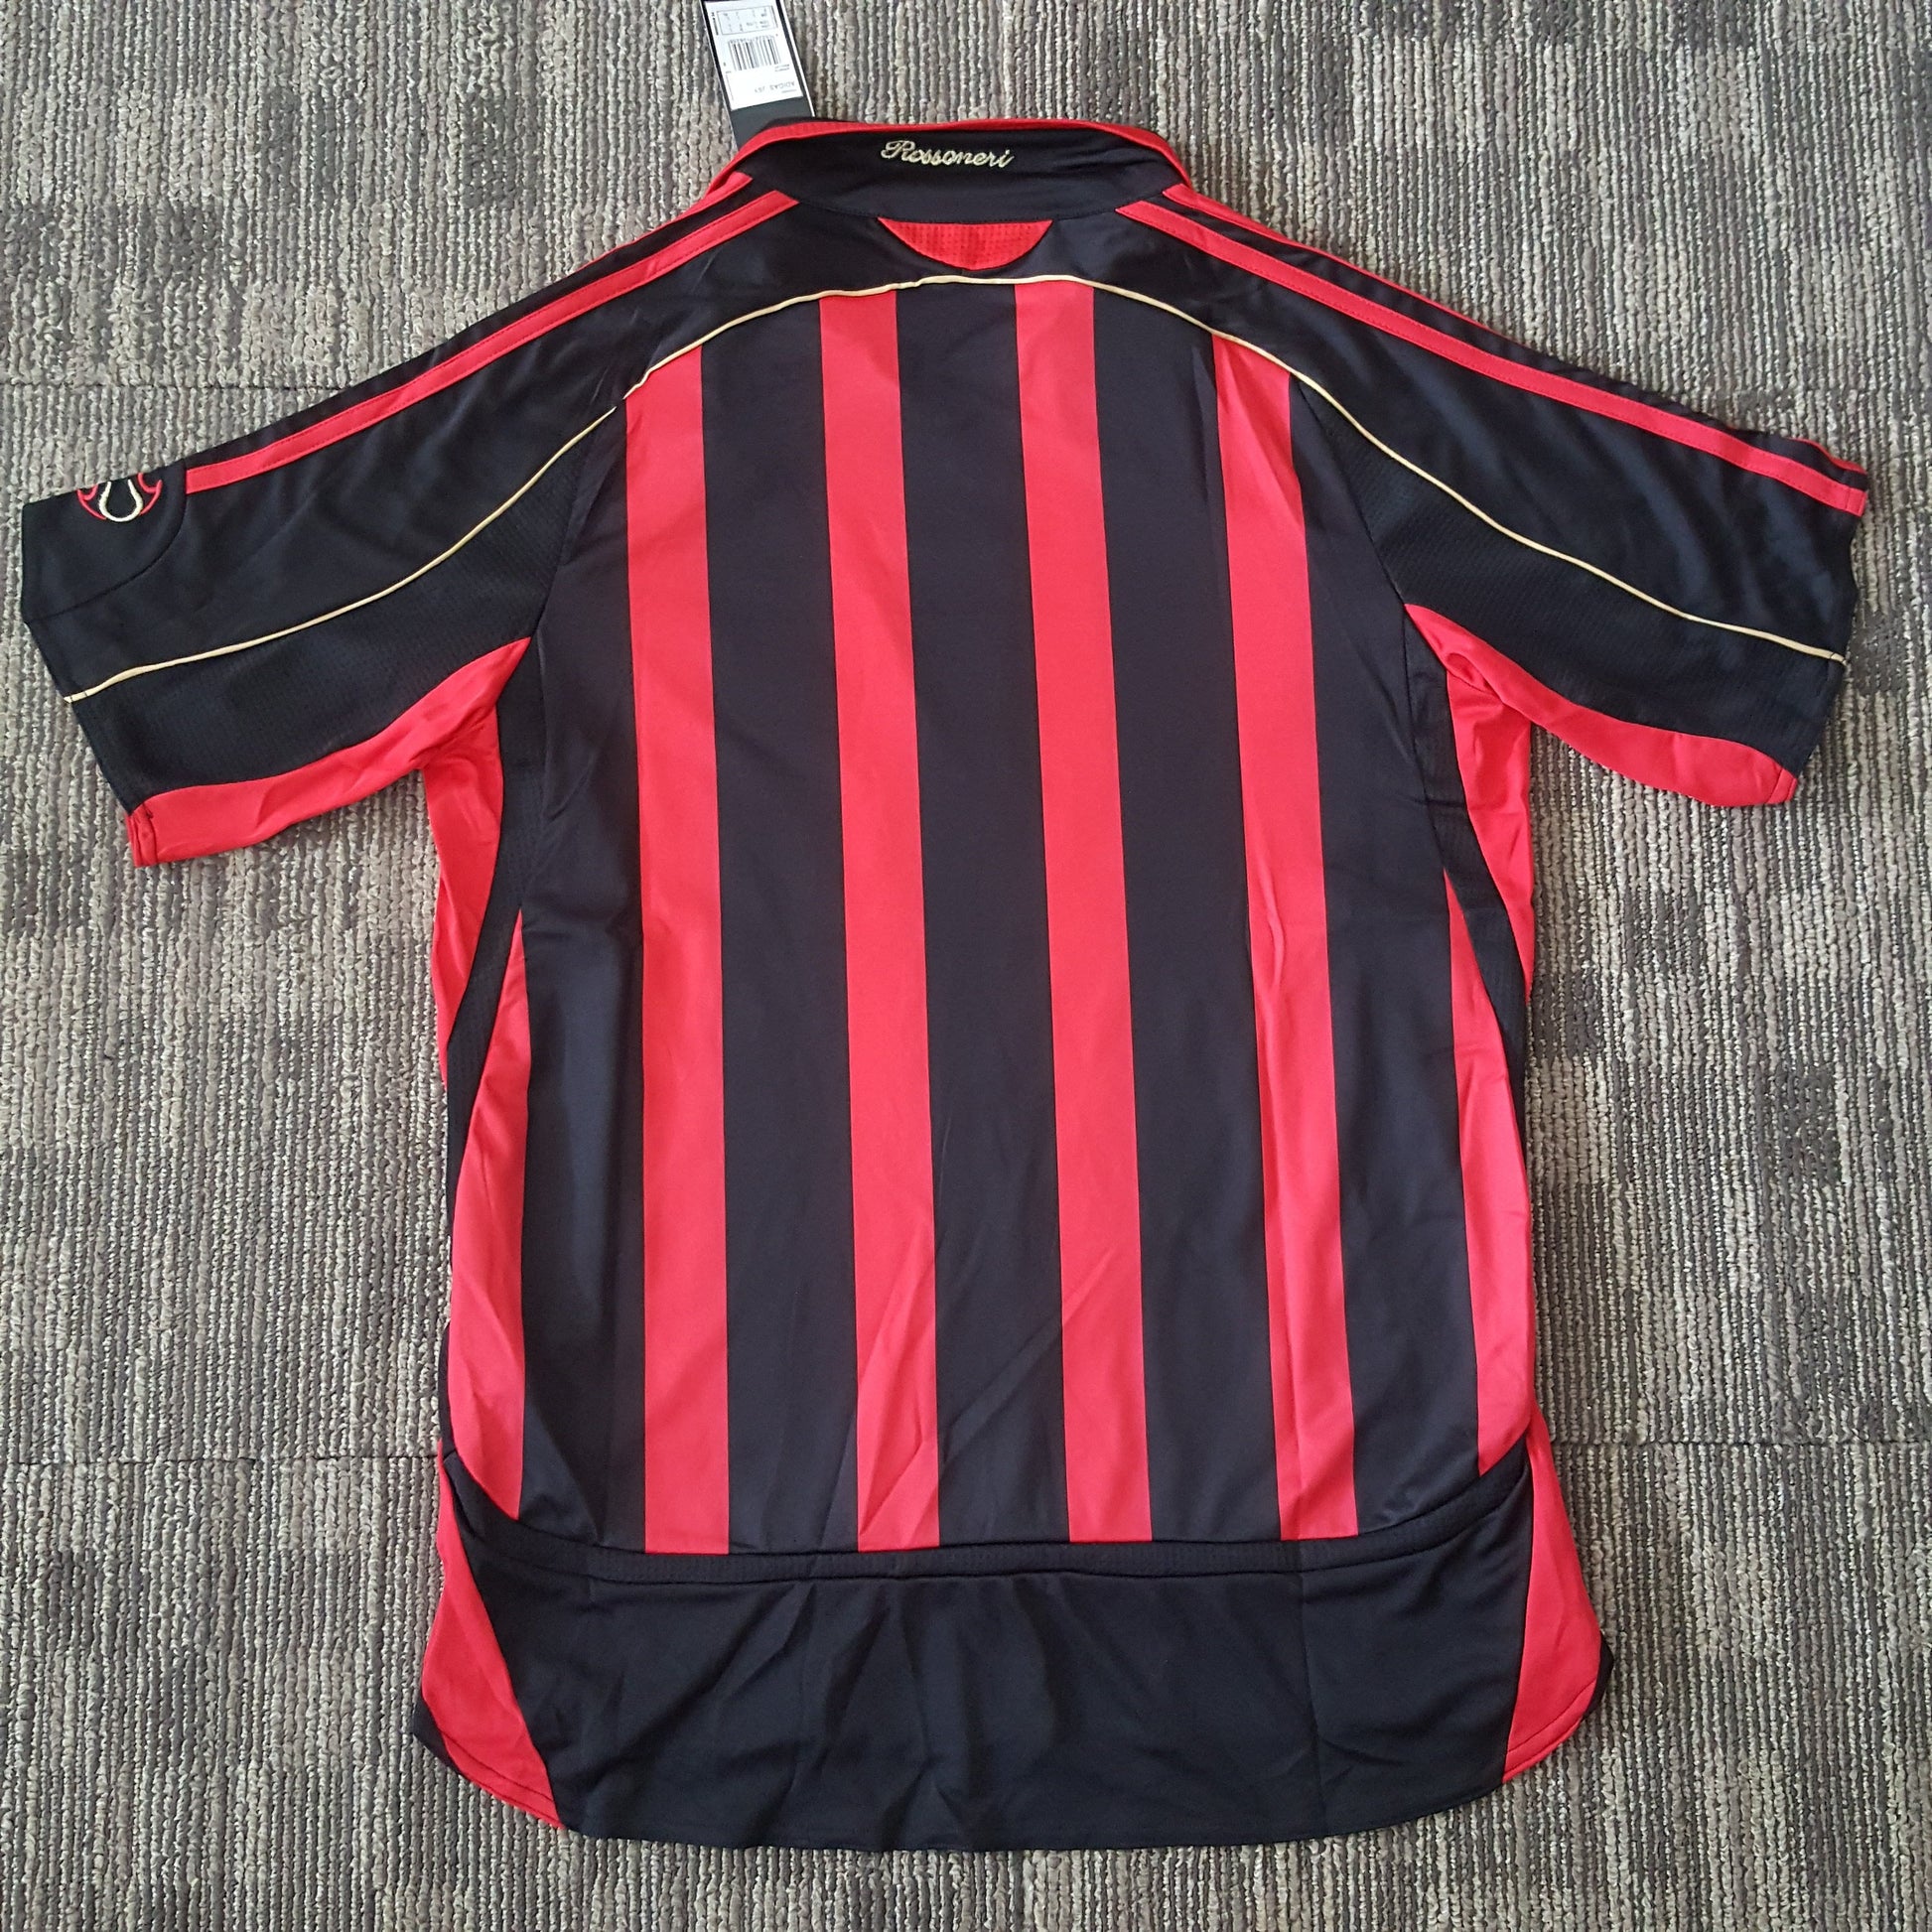 2006/07 AC Milan Home Shirt - ClassicFootballJersey